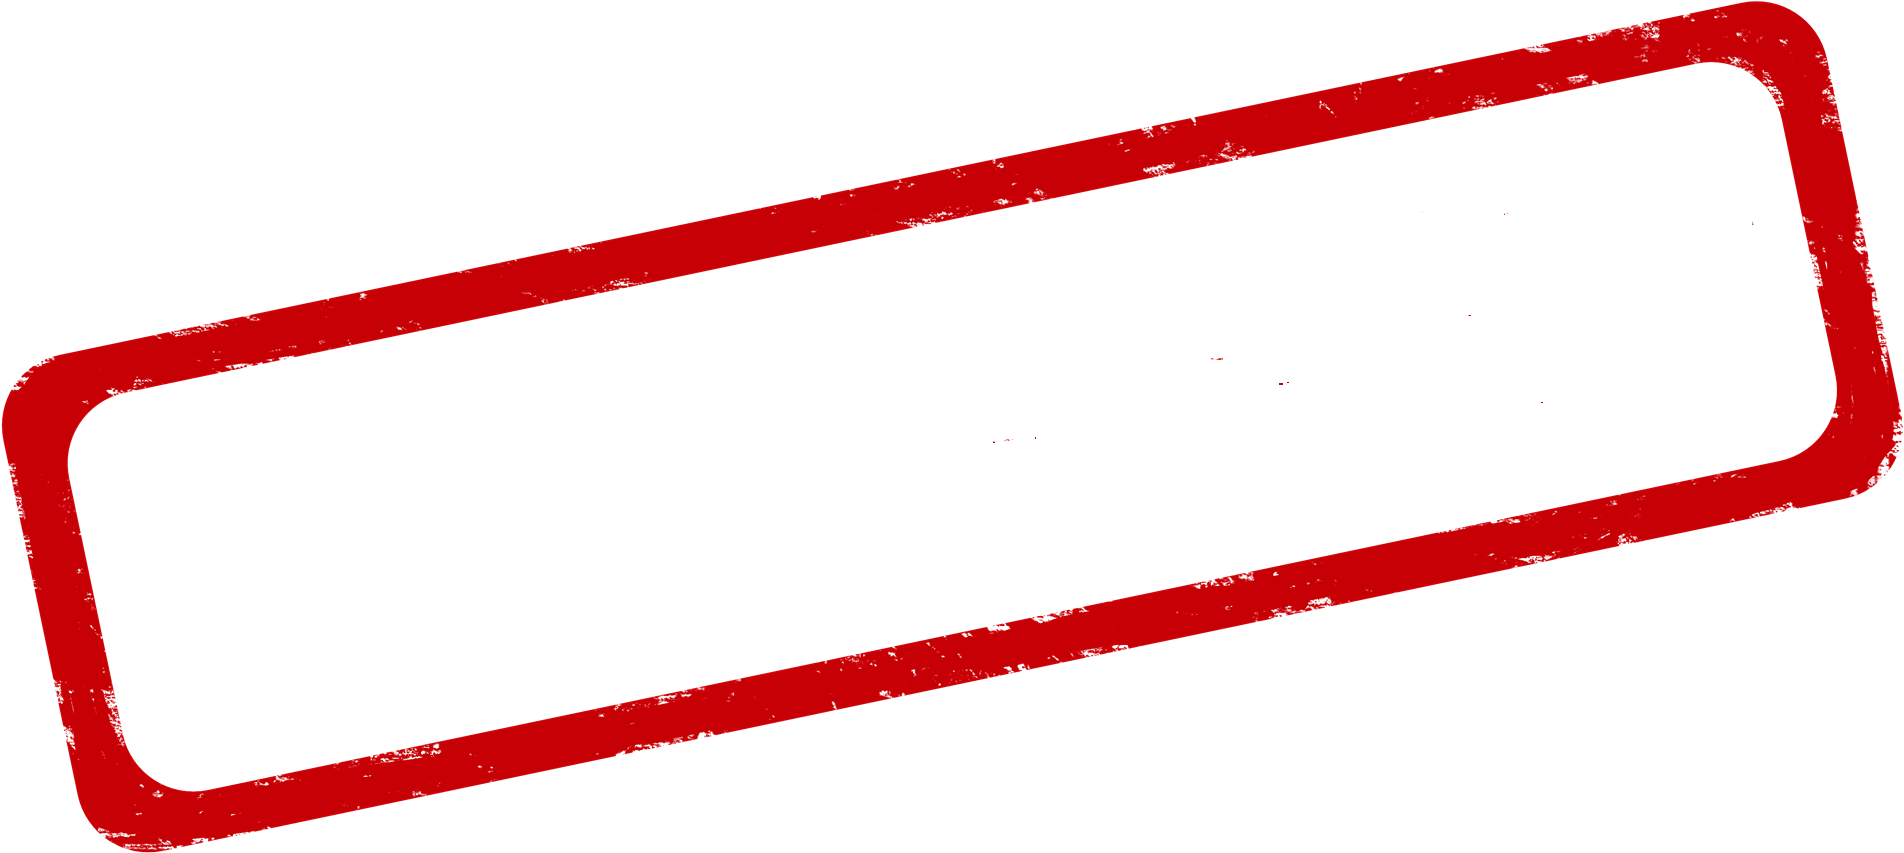 Red Stamp Outline